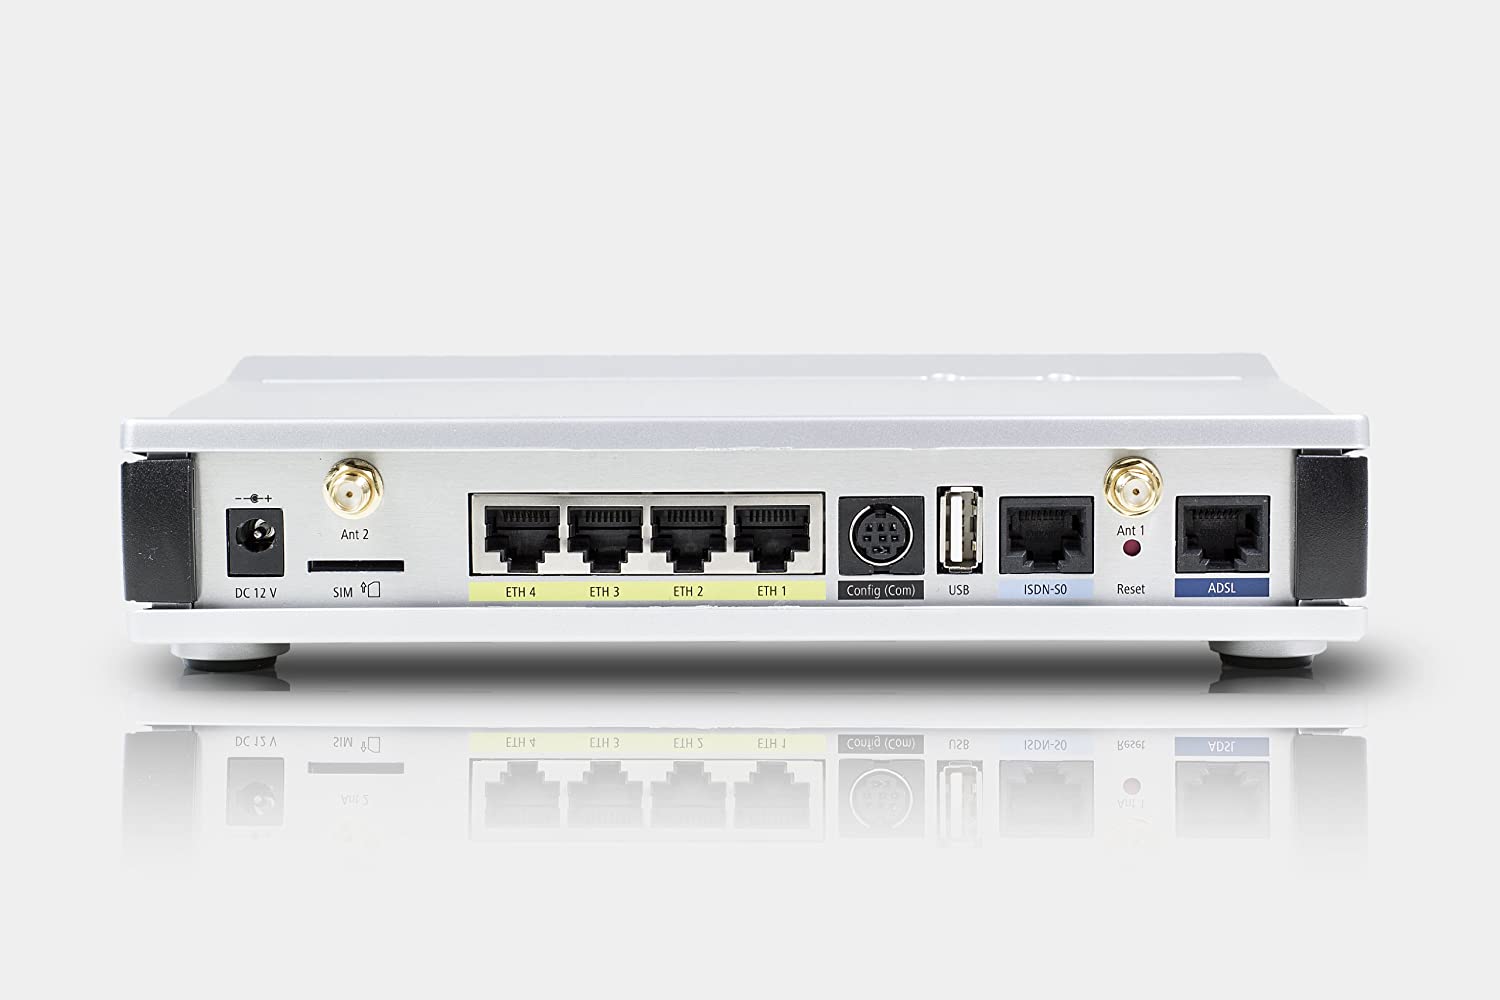 Lancom 1781A-4G VPN ADSL2+ Router